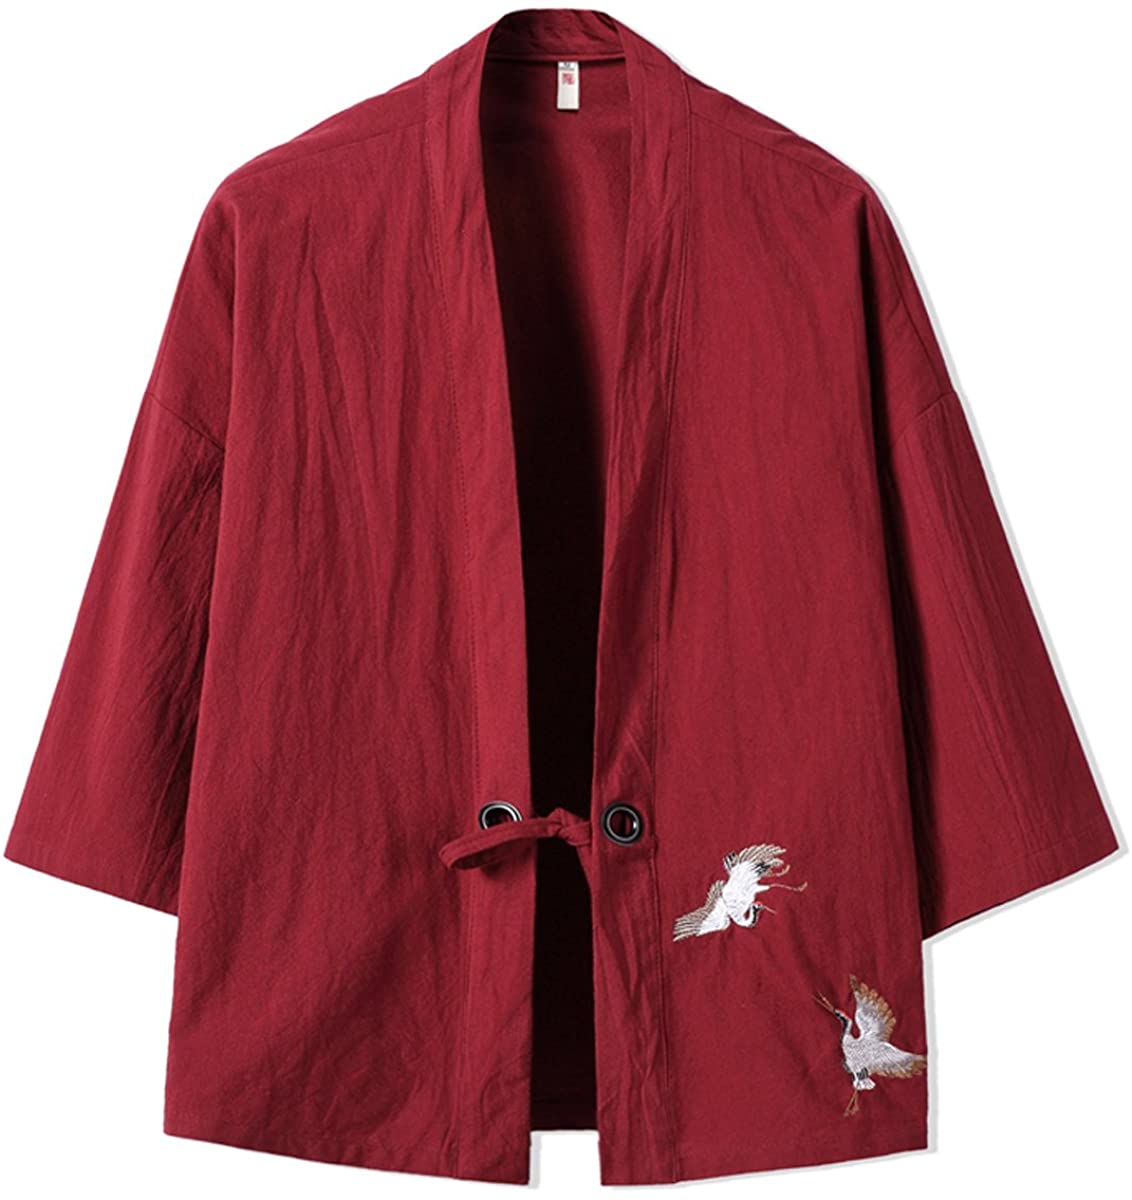 PRIJOUHE Men's Japanese Kimono Cardigan Jackets Casual Long